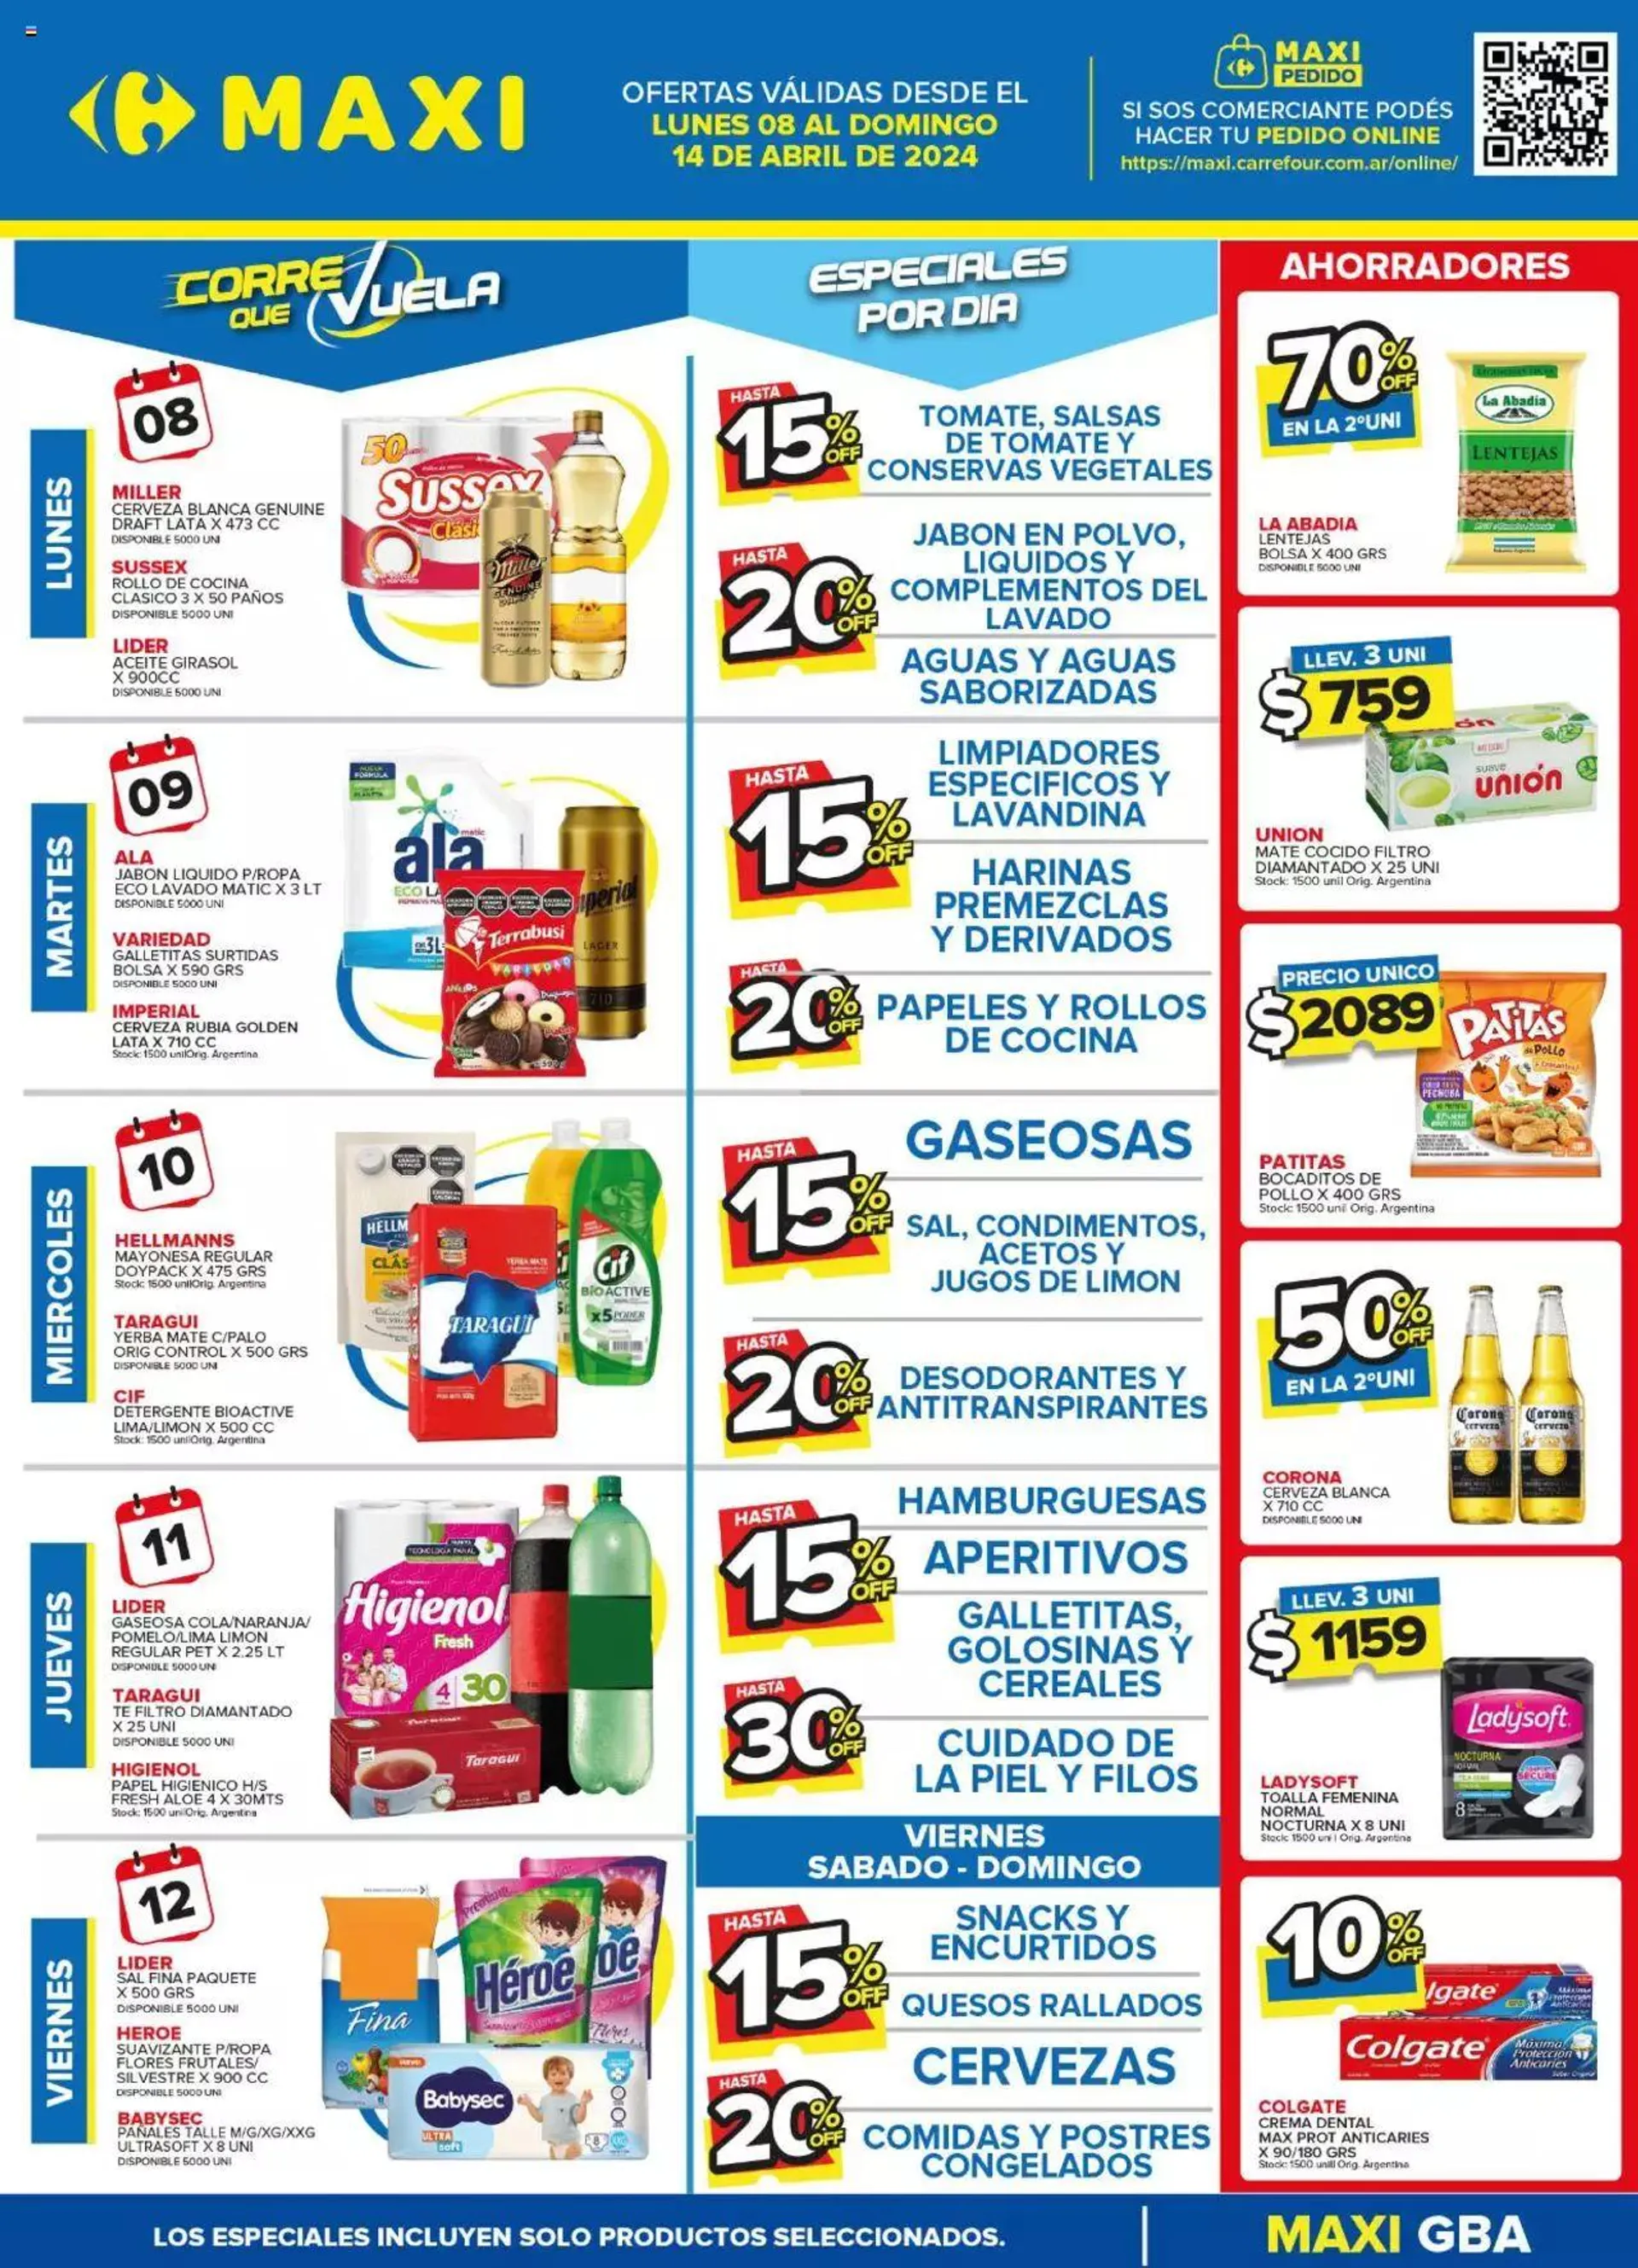 Ofertas de Carrefour Maxi catálogo 8 de abril al 14 de abril 2024 - Página  del catálogo